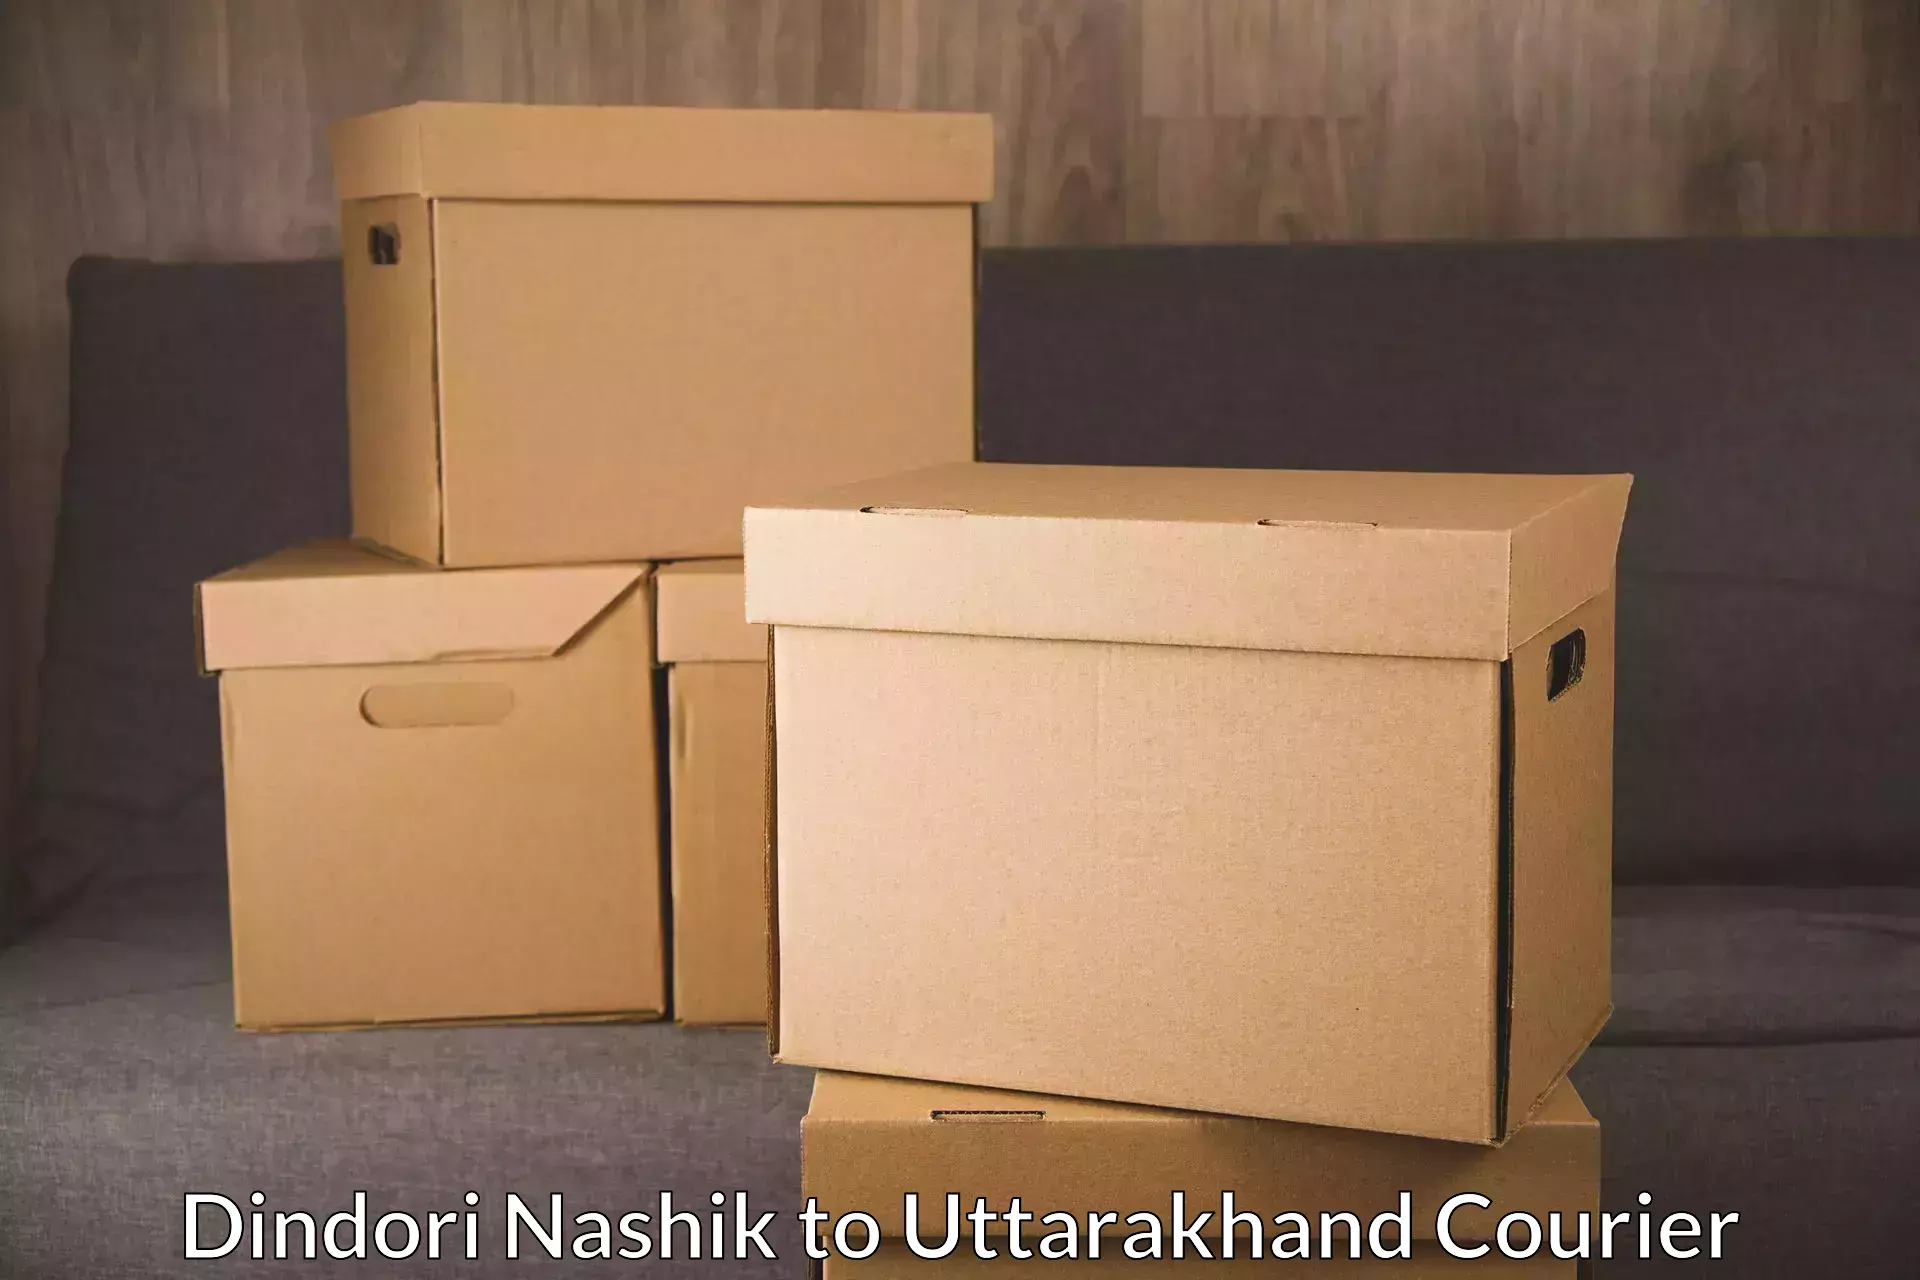 High-capacity parcel service Dindori Nashik to Bhimtal